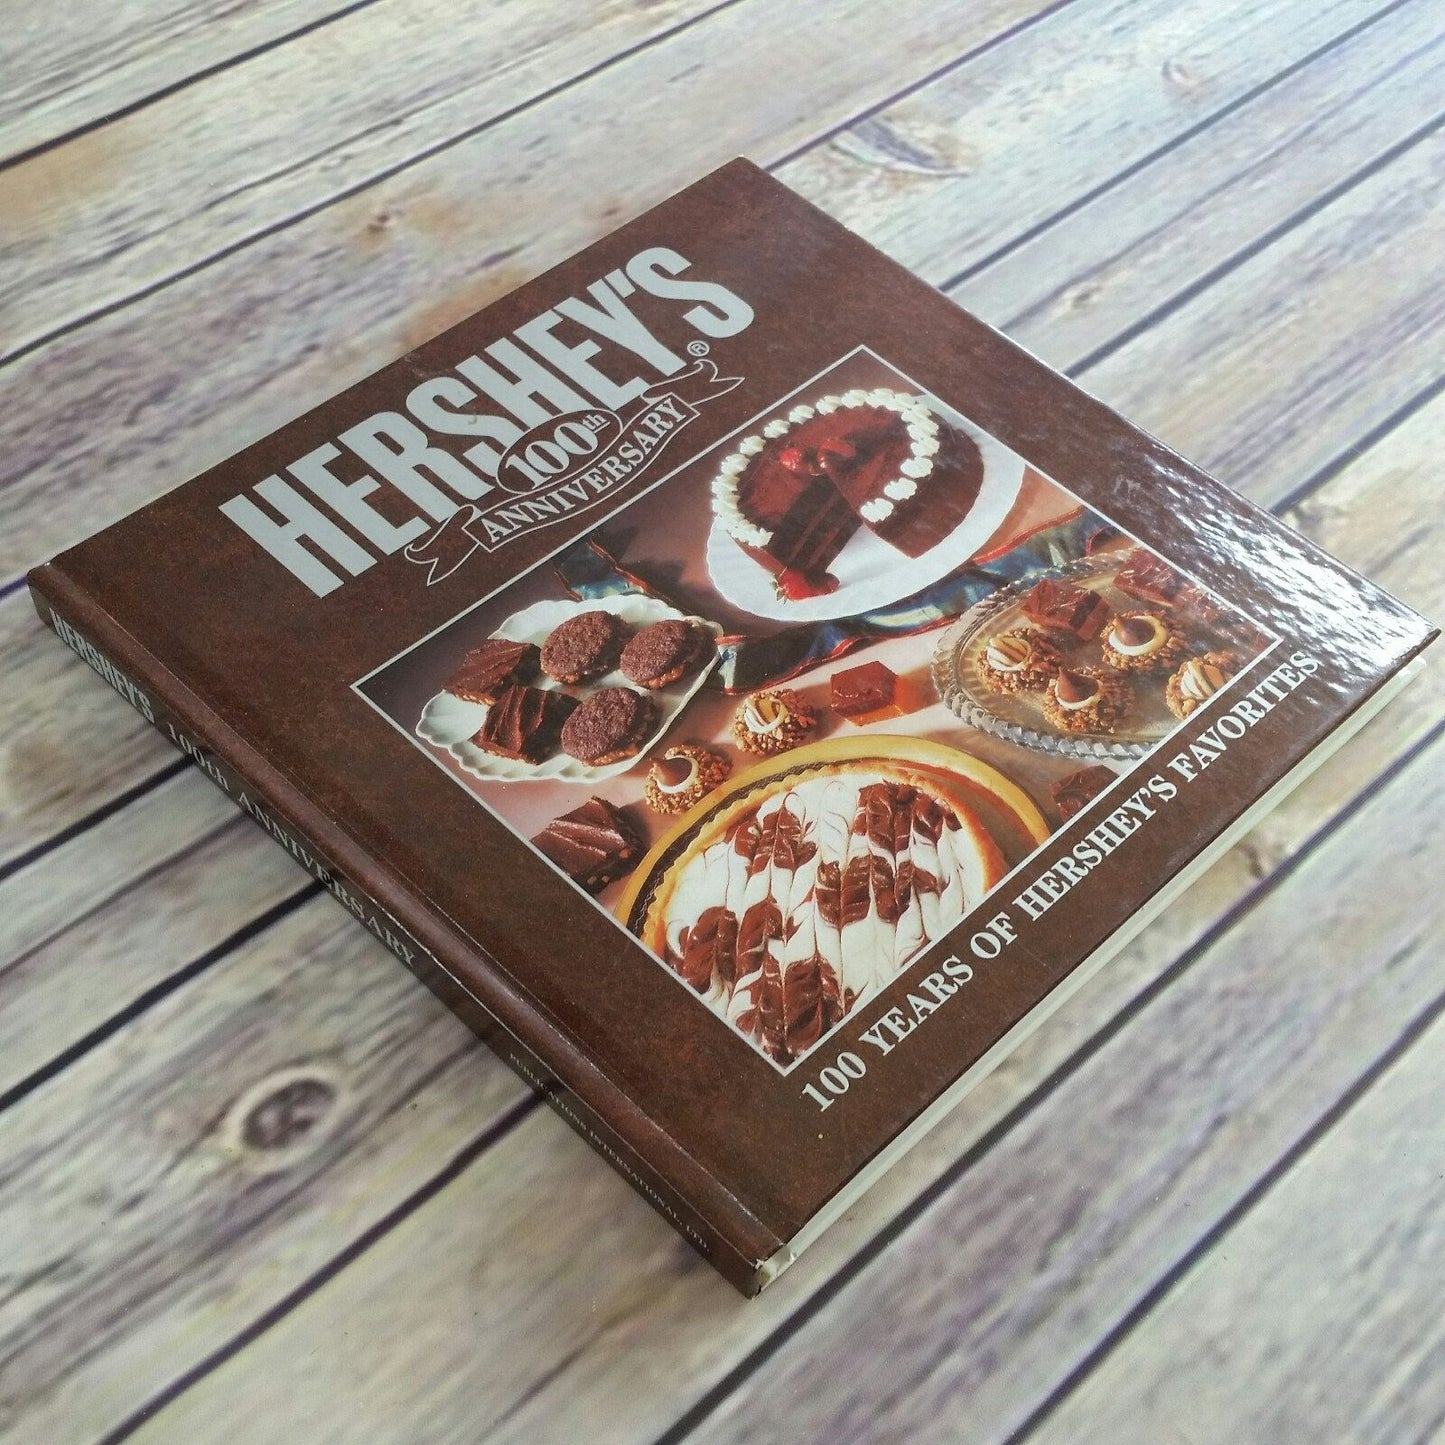 Vintage Cookbook Hersheys 100th Anniversary Recipes 1994 Hardcover Cakes Pies Tarts Desserts Holidays Brunch Breads Treats